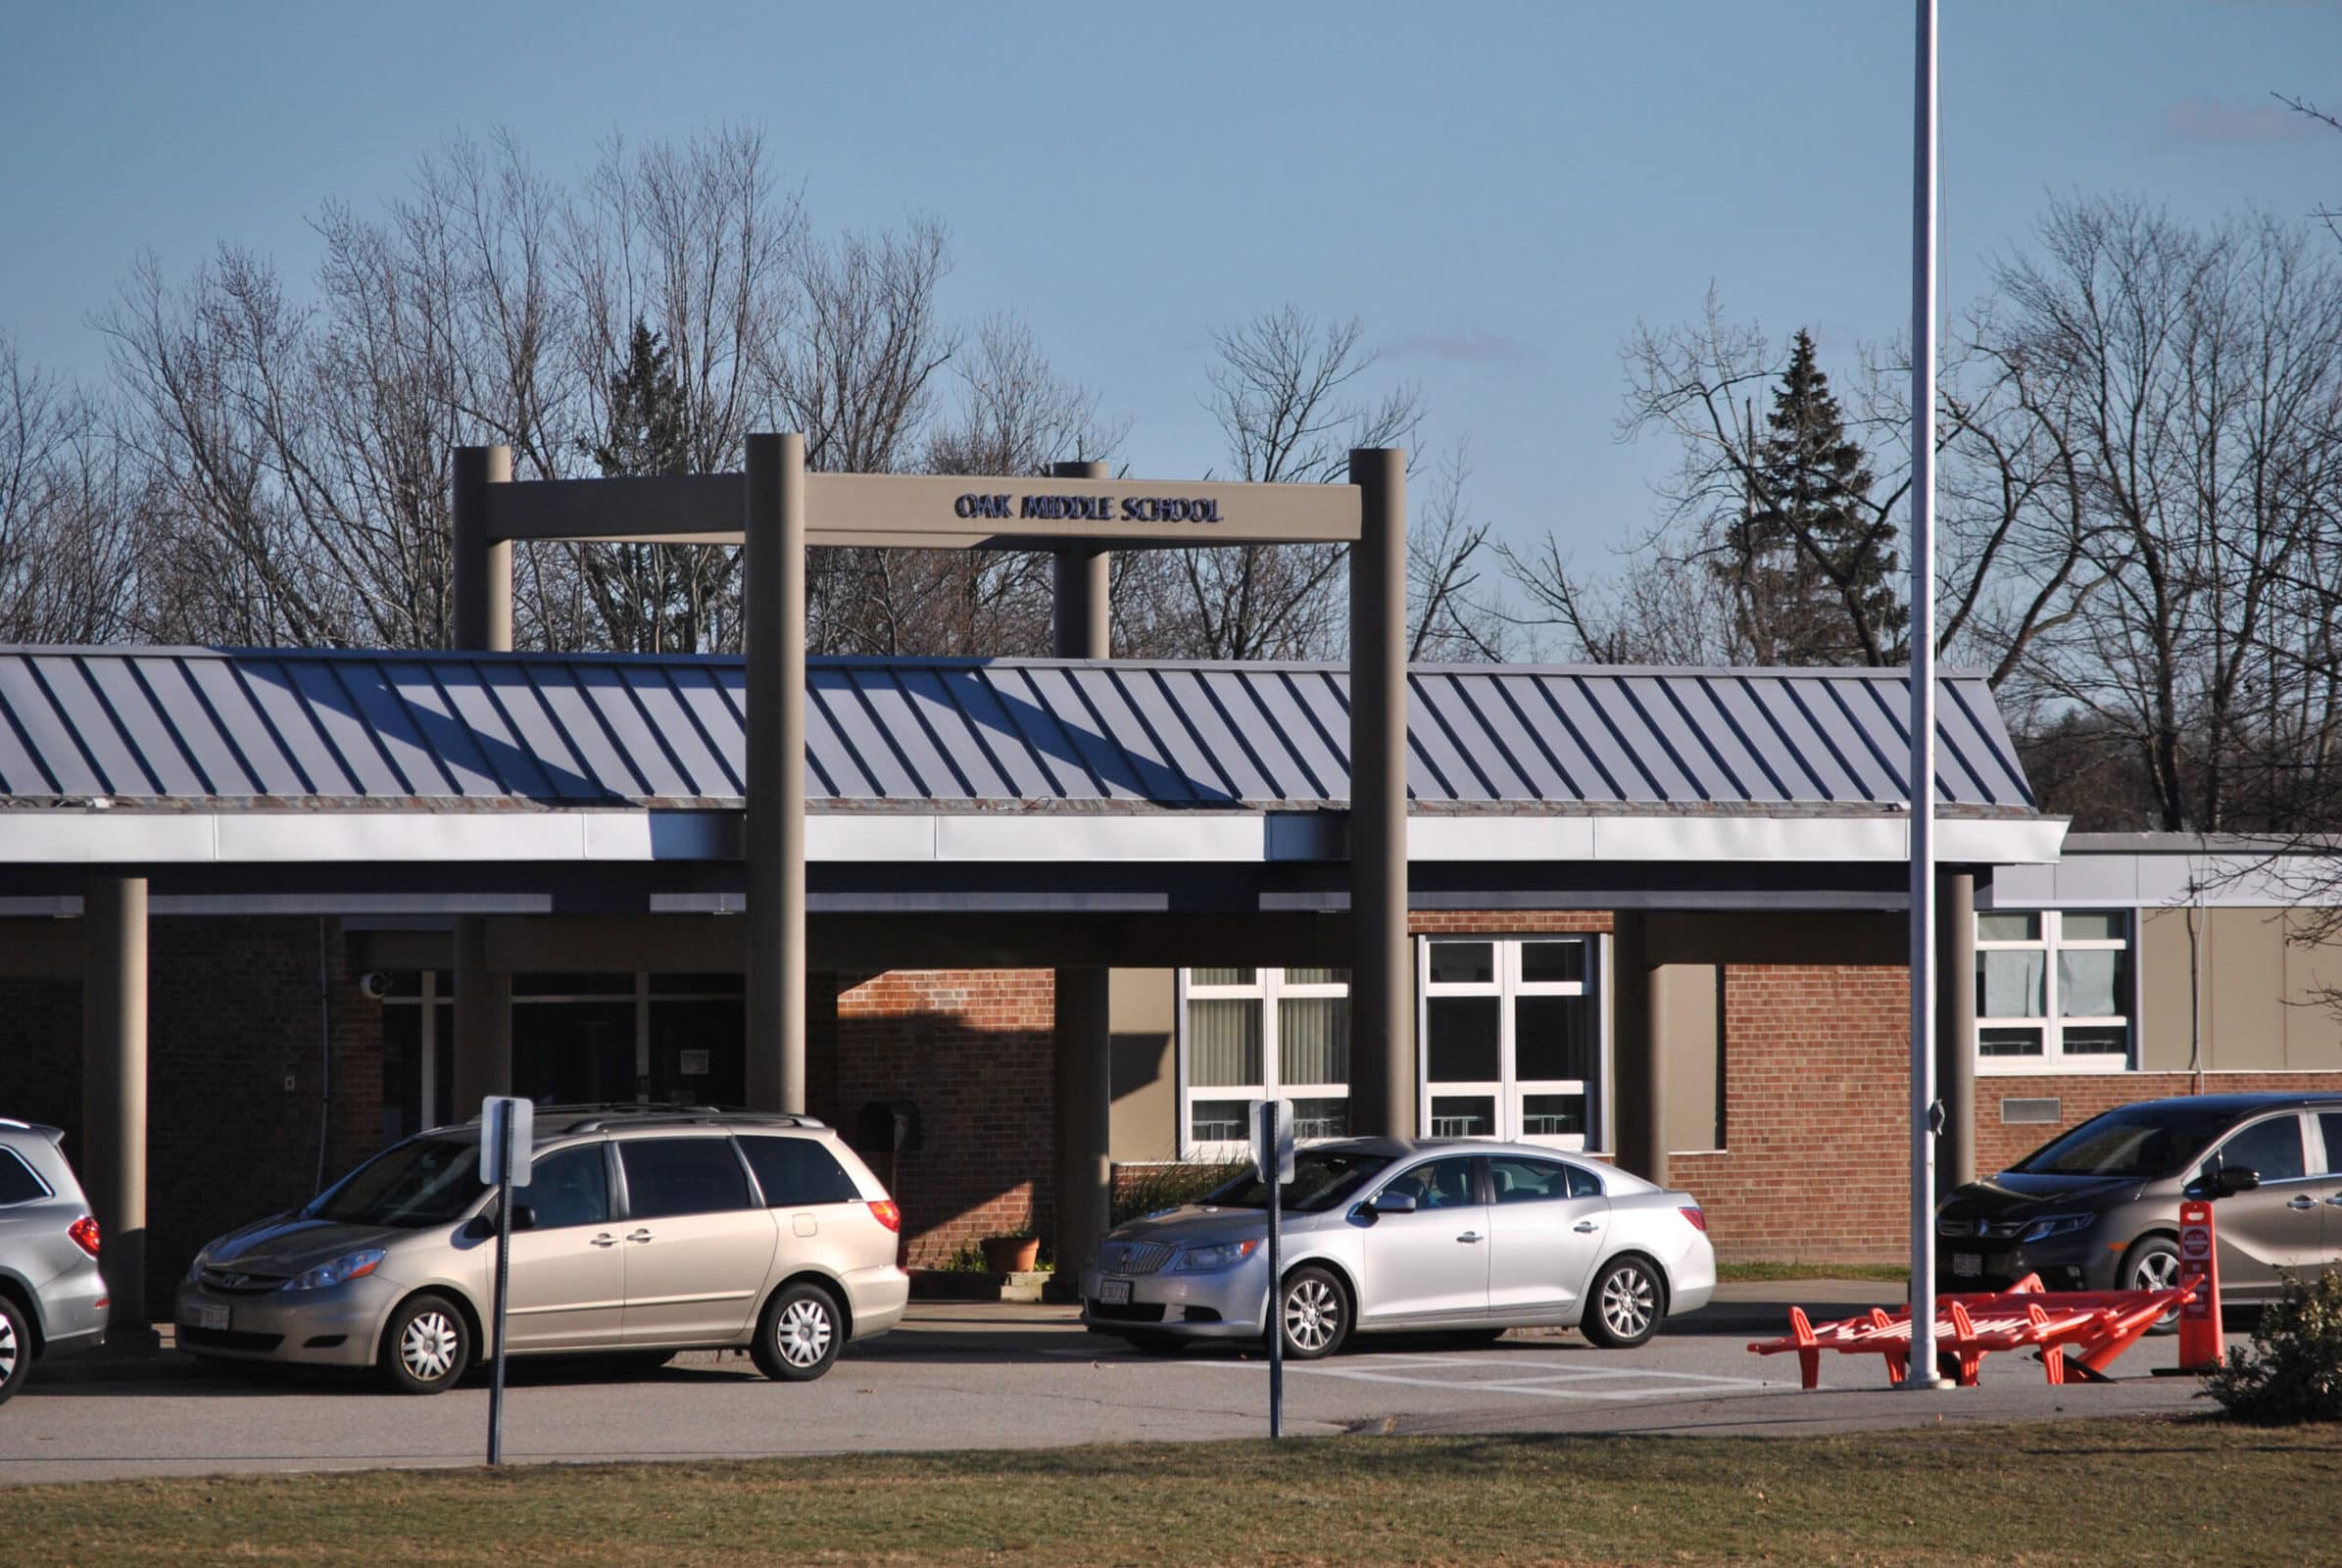 Shrewsbury receives $1.9M for Oak Middle School repairs